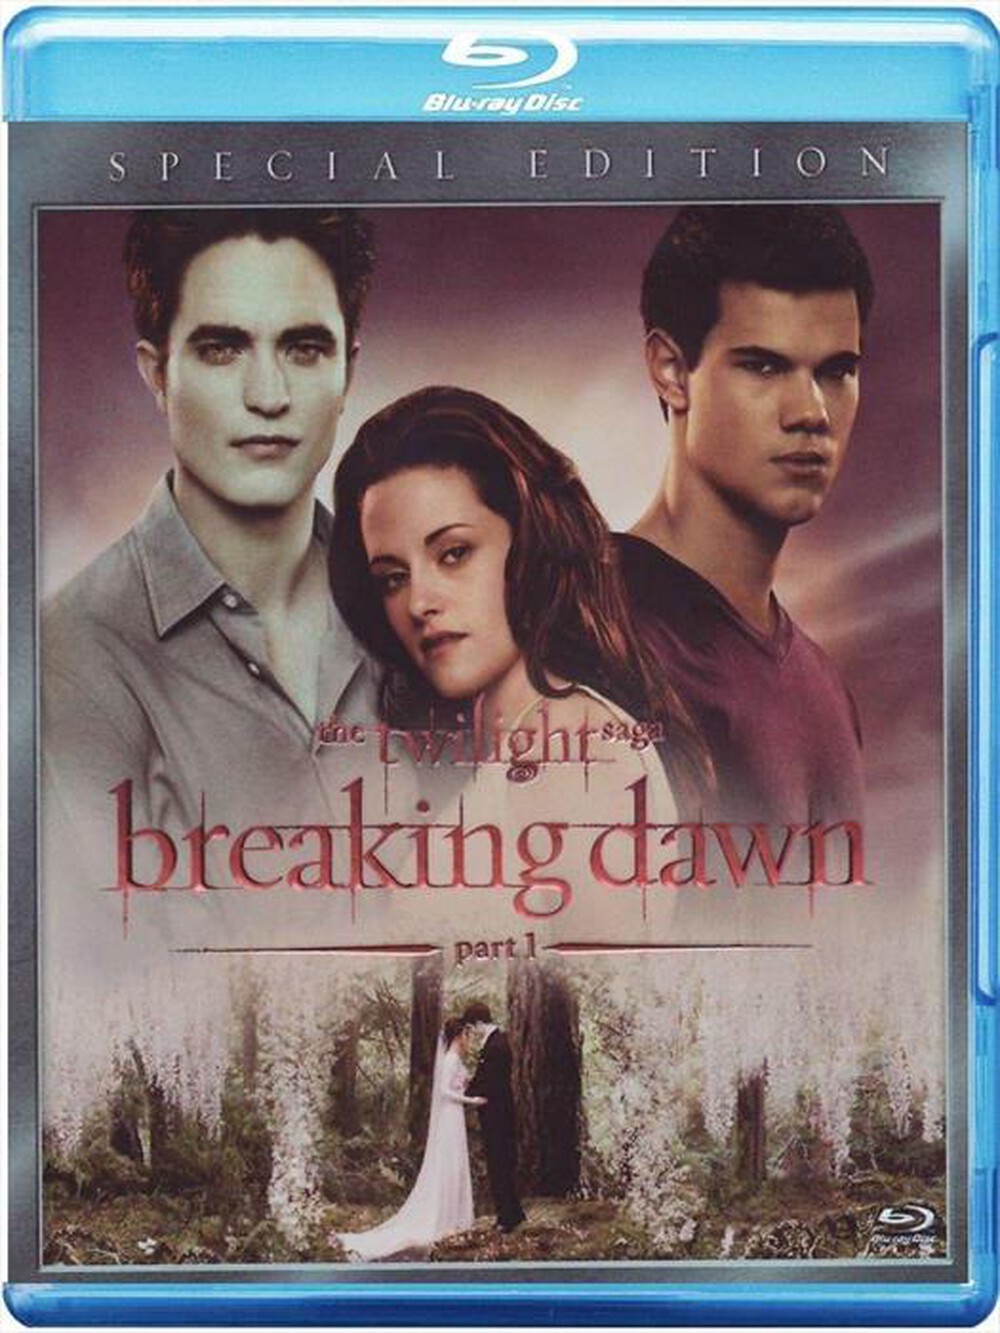 "EAGLE PICTURES - Breaking Dawn - Parte 1 - The Twilight Saga (SE)"